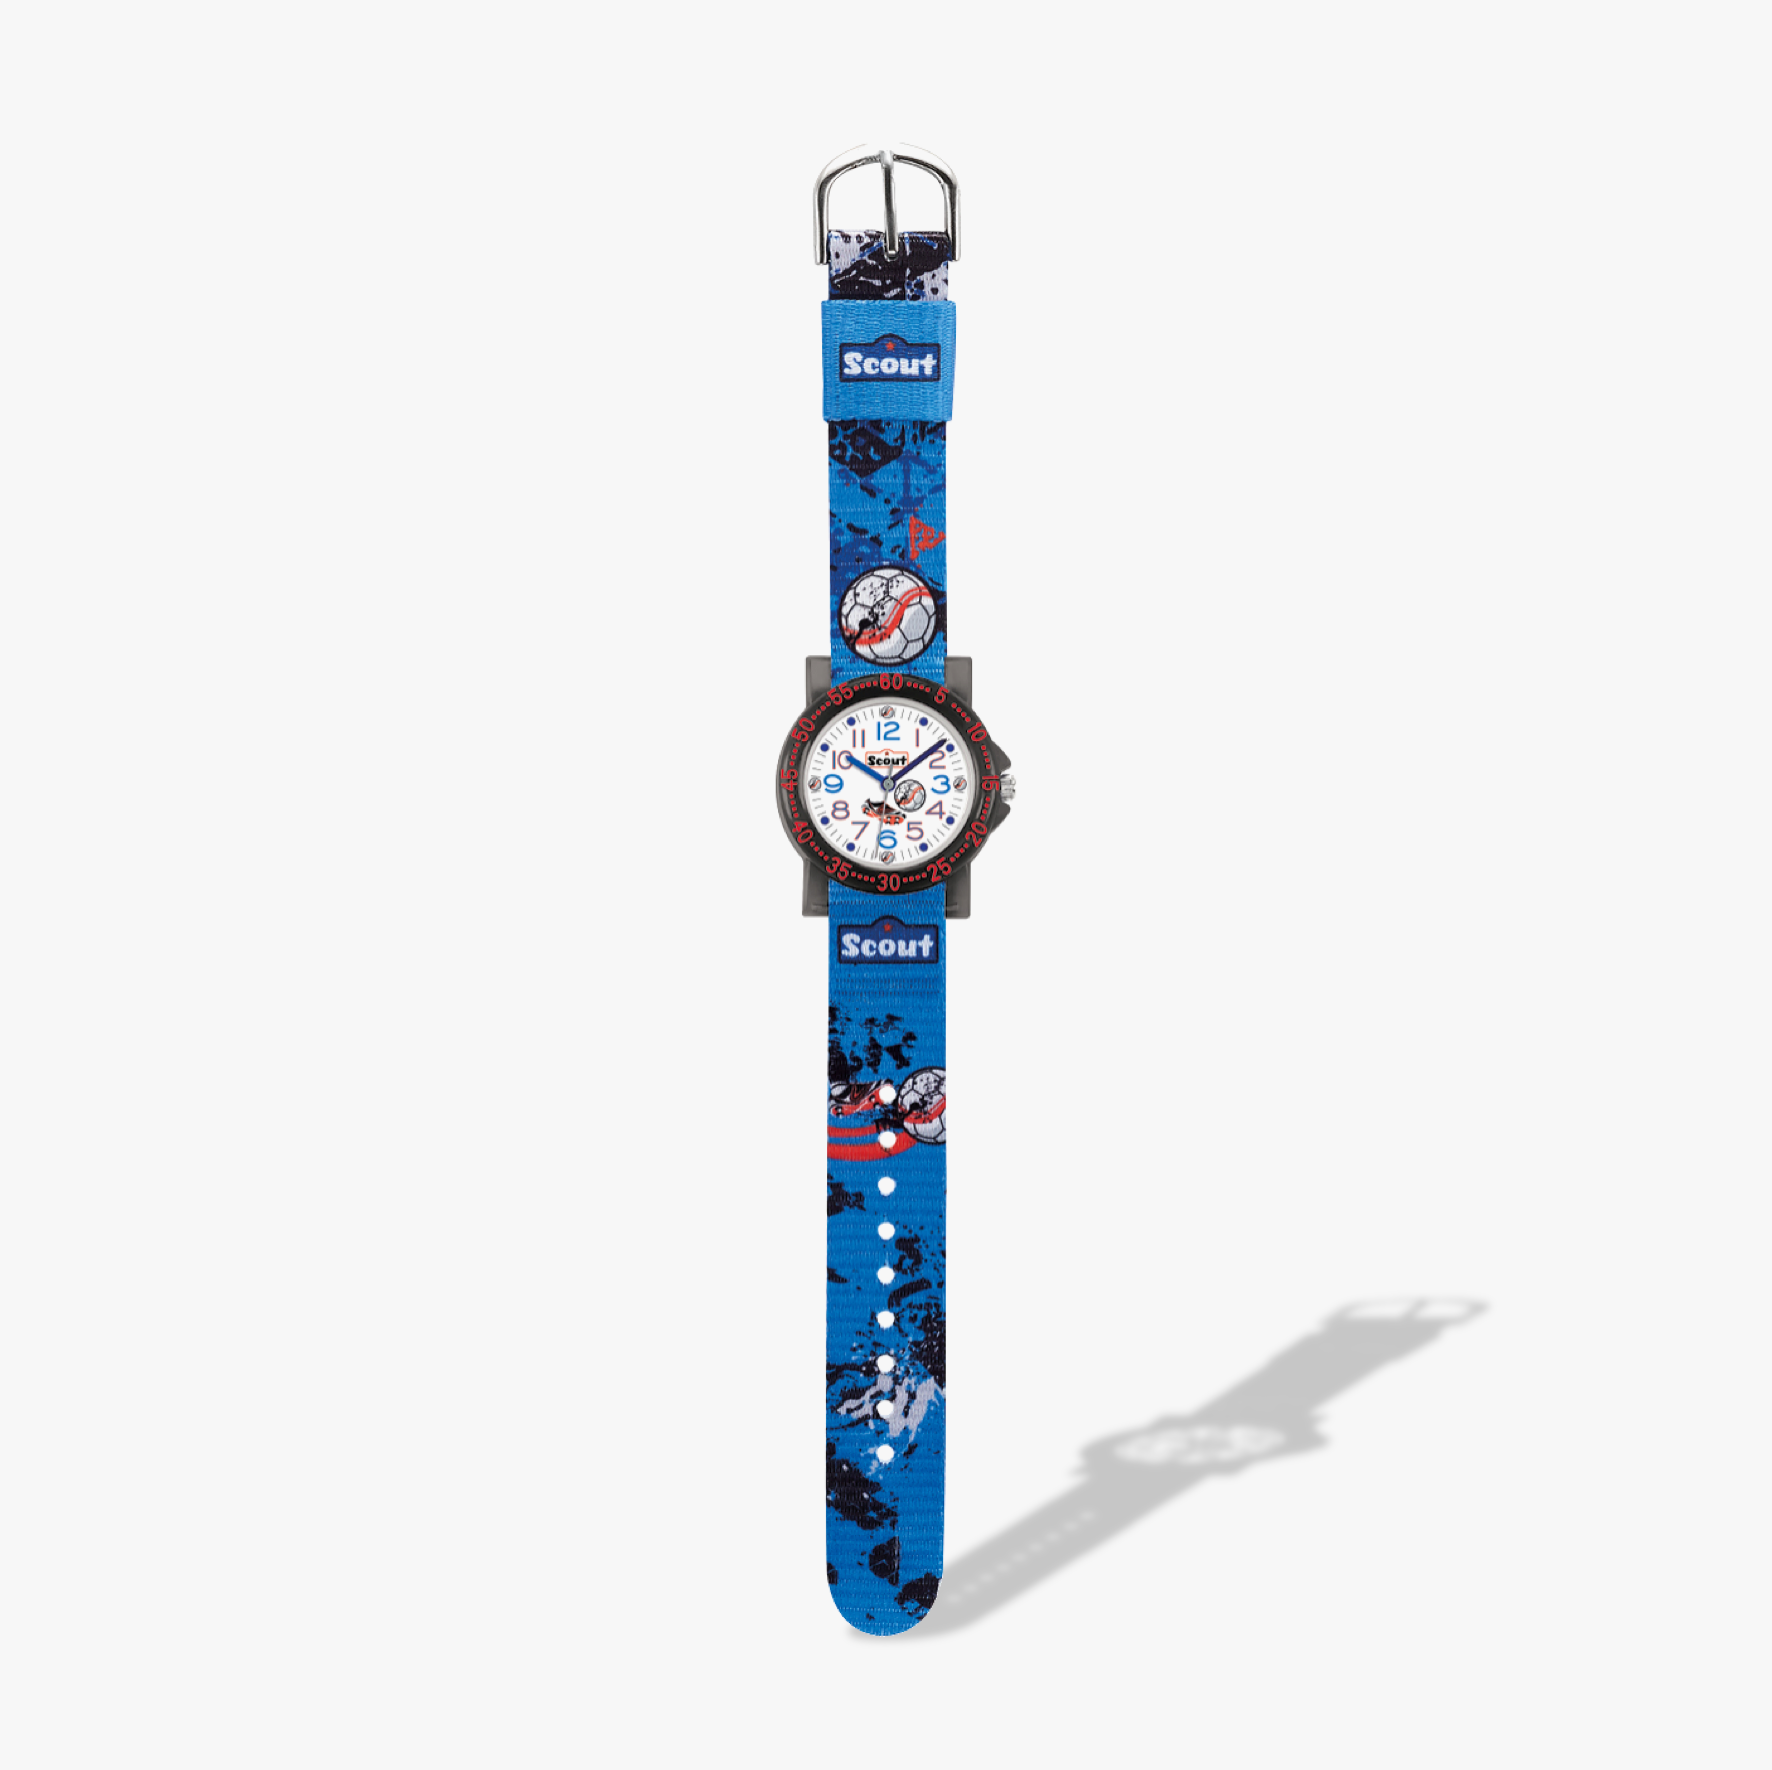 280375009 Children's watch with football motif